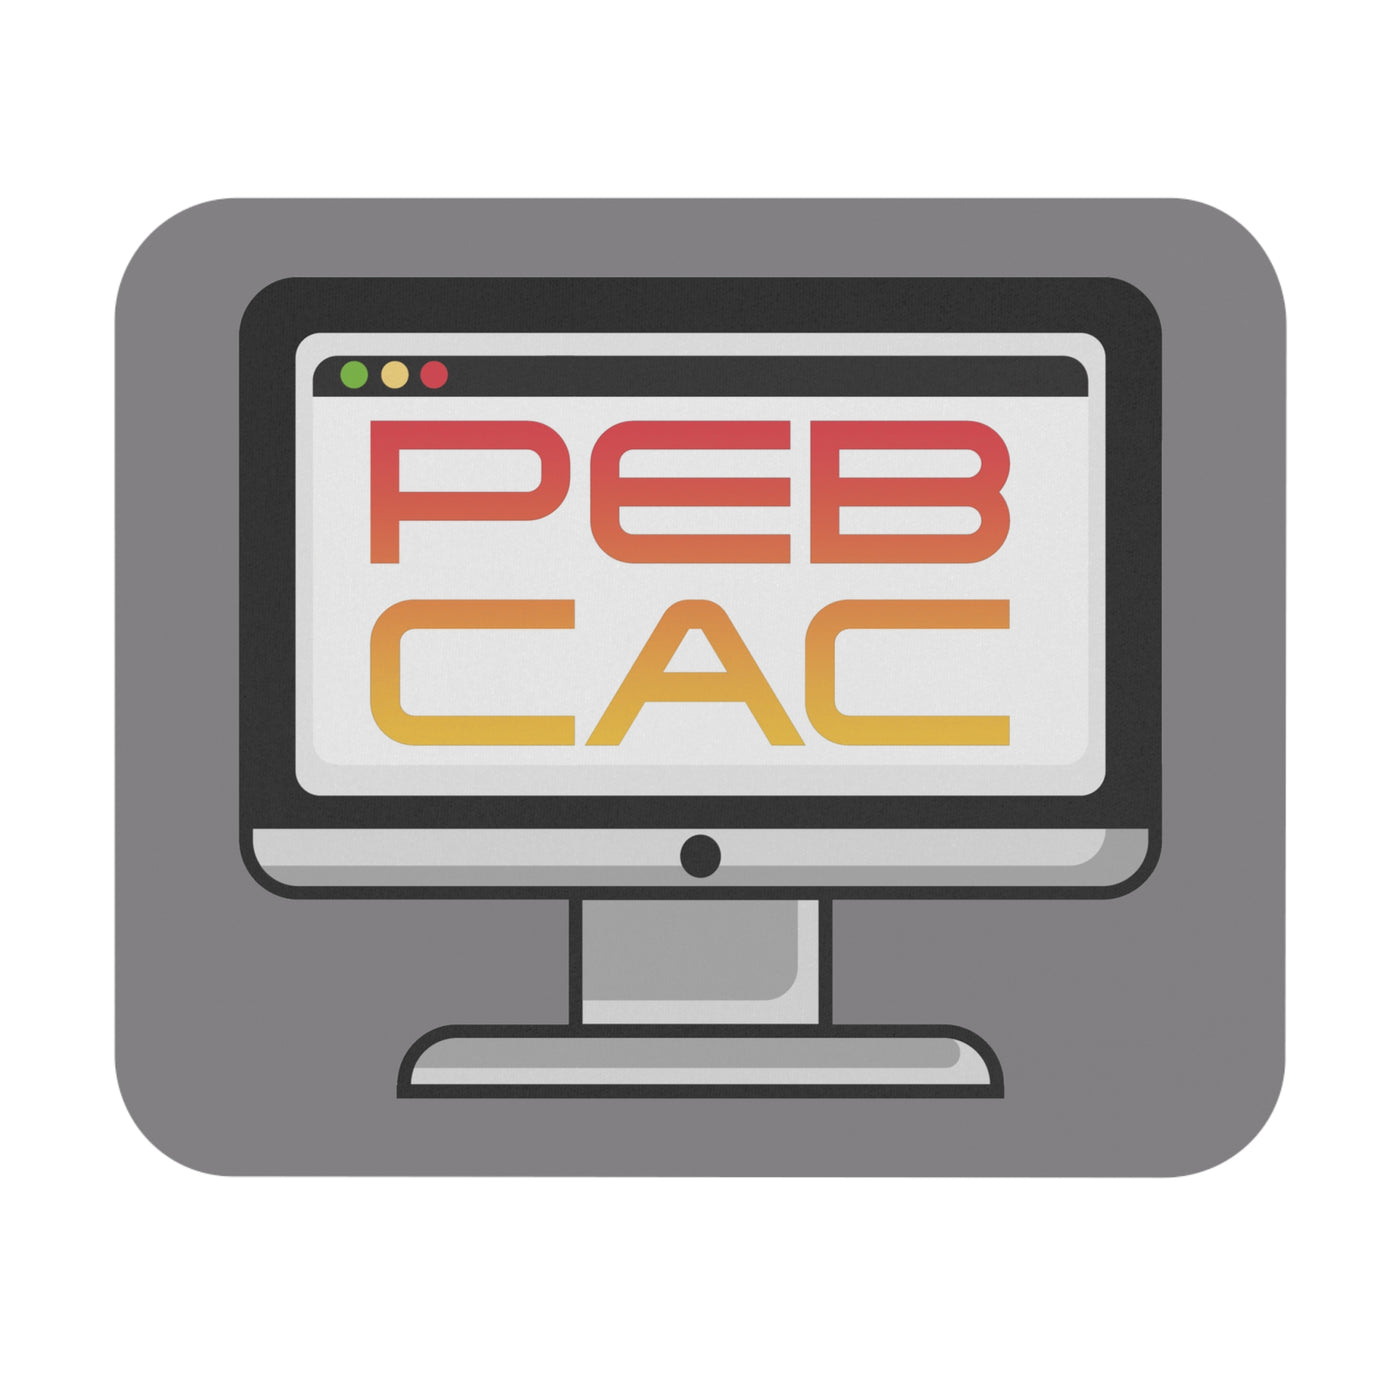 PEBCAC - Mouse Pad 9x8